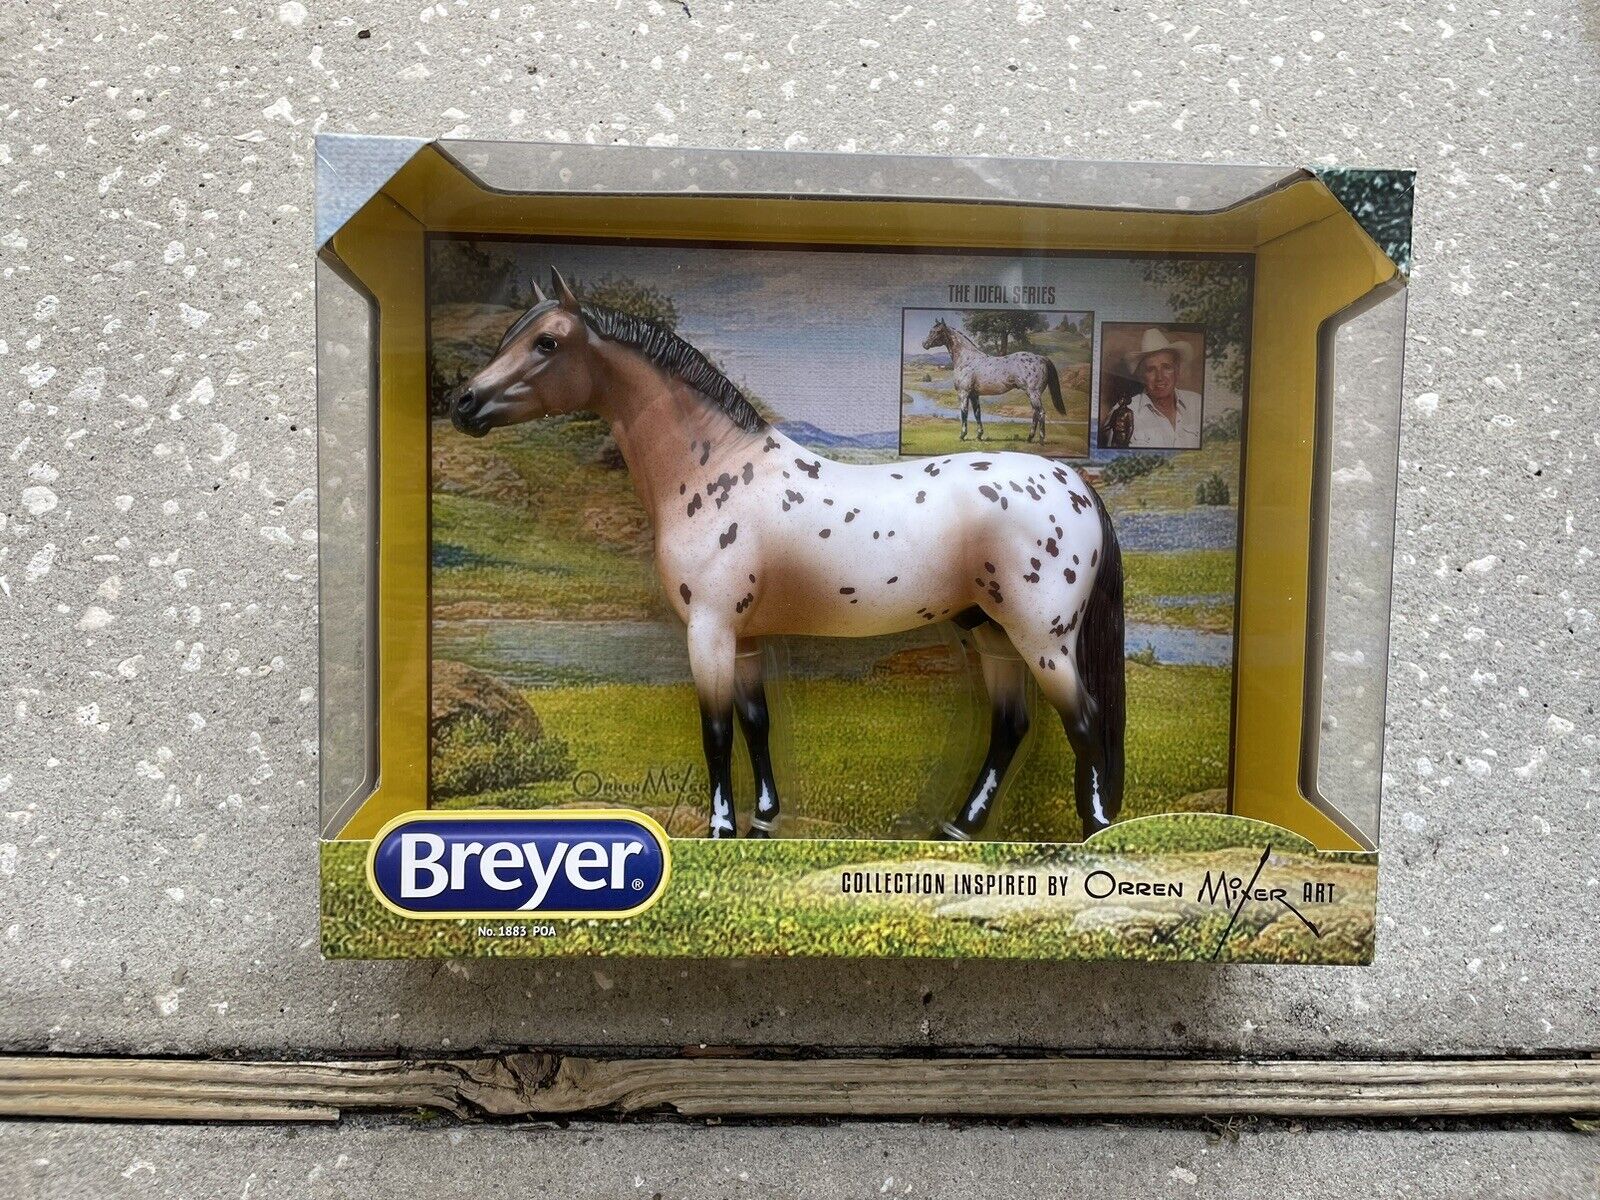 NEW NIB Breyer Ideal Horse Series #1883 Pony of the Americas Orren Mixer Nikolas